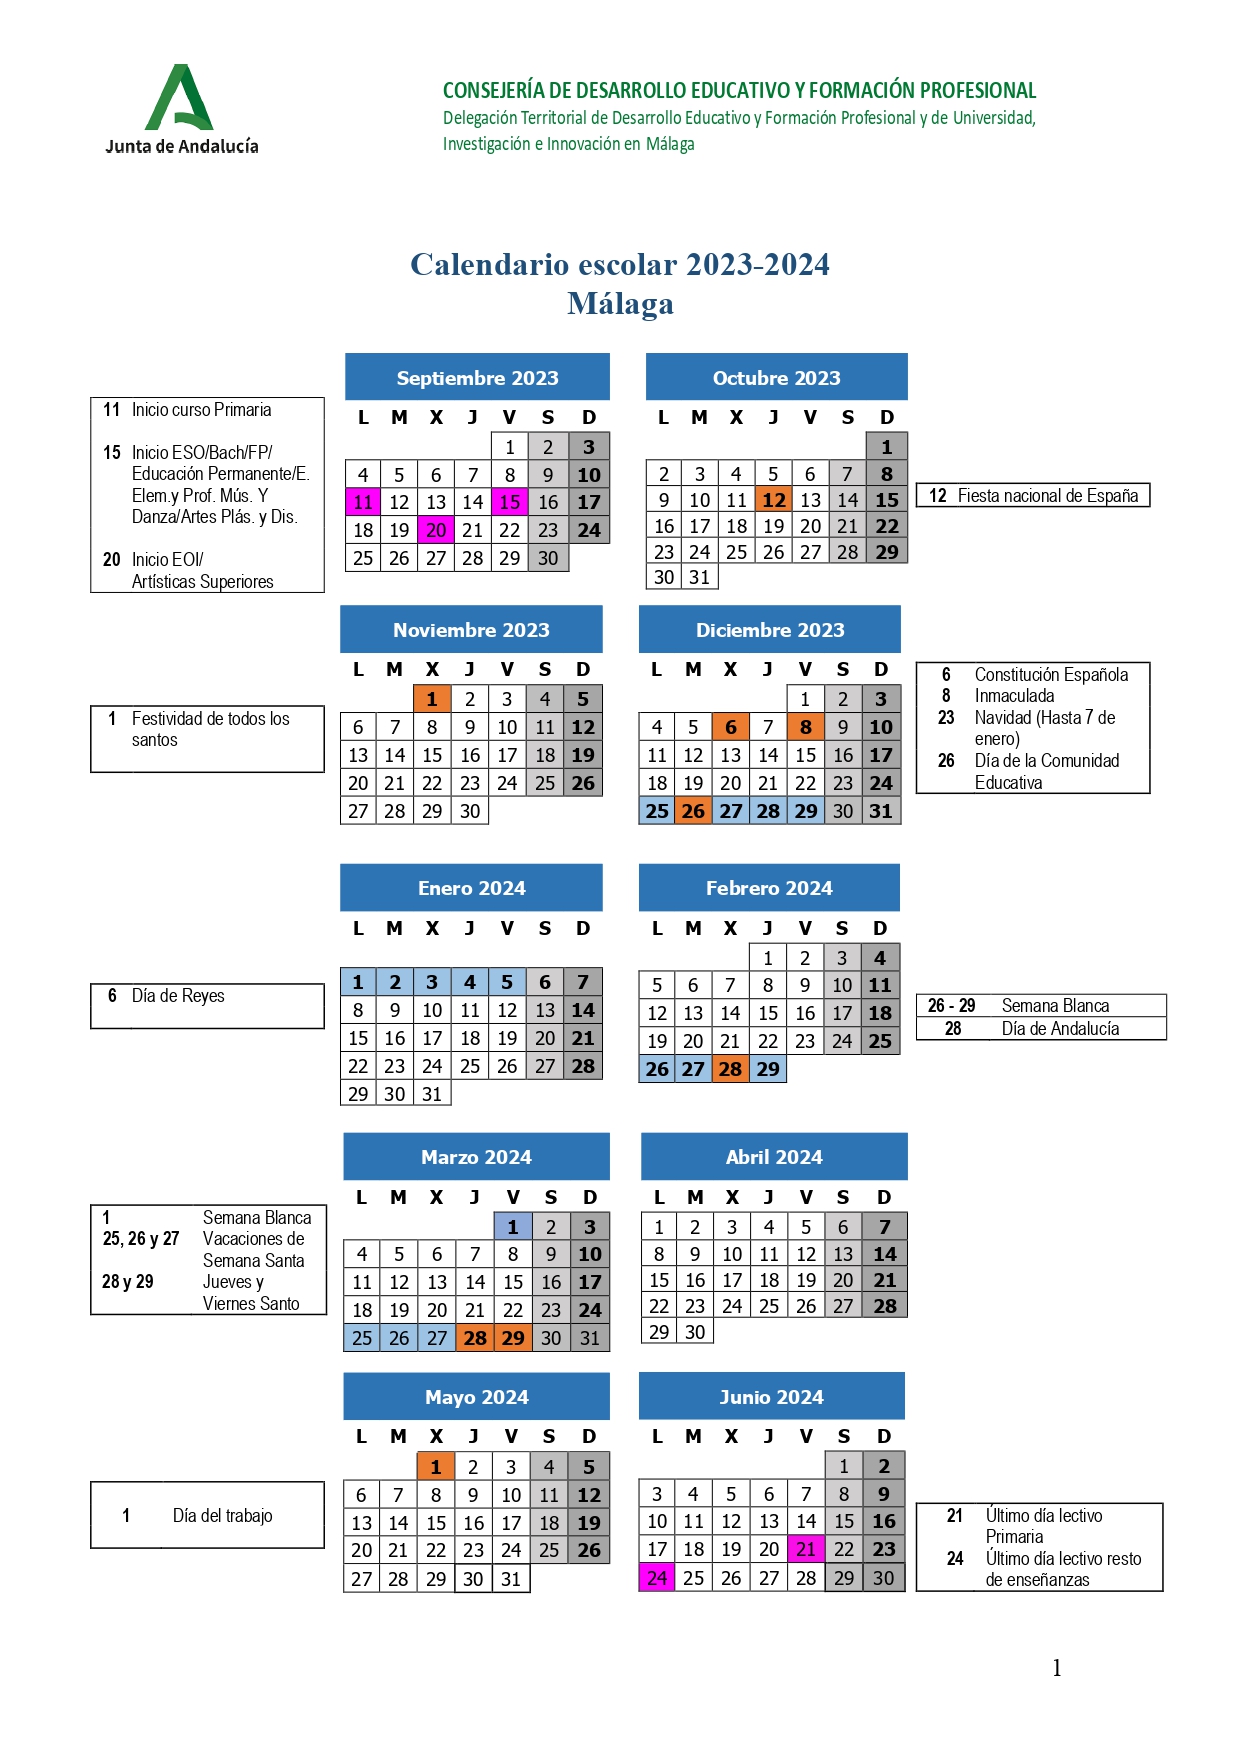 Grafico Calendario escolar 2023 2024 page 0001